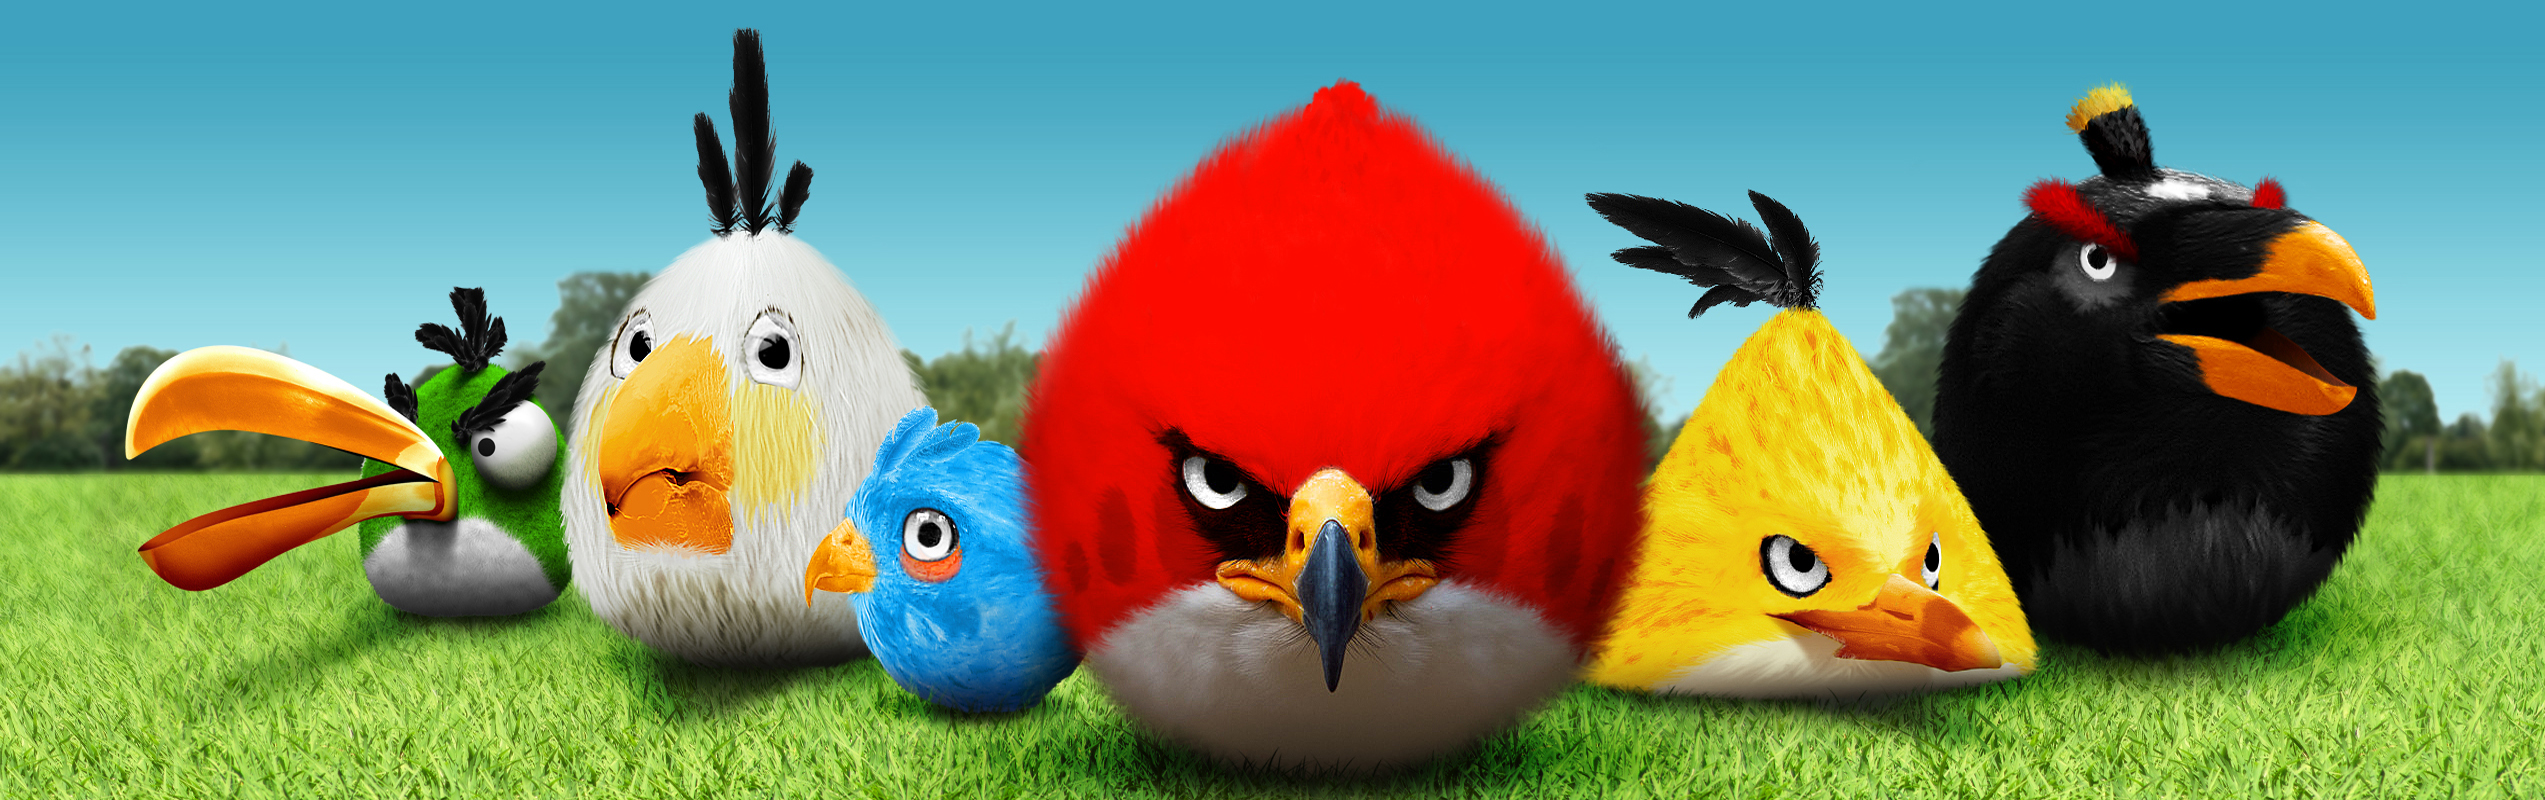 Angry Birds Computer Wallpapers Desktop Backgrounds 2545x800 ID